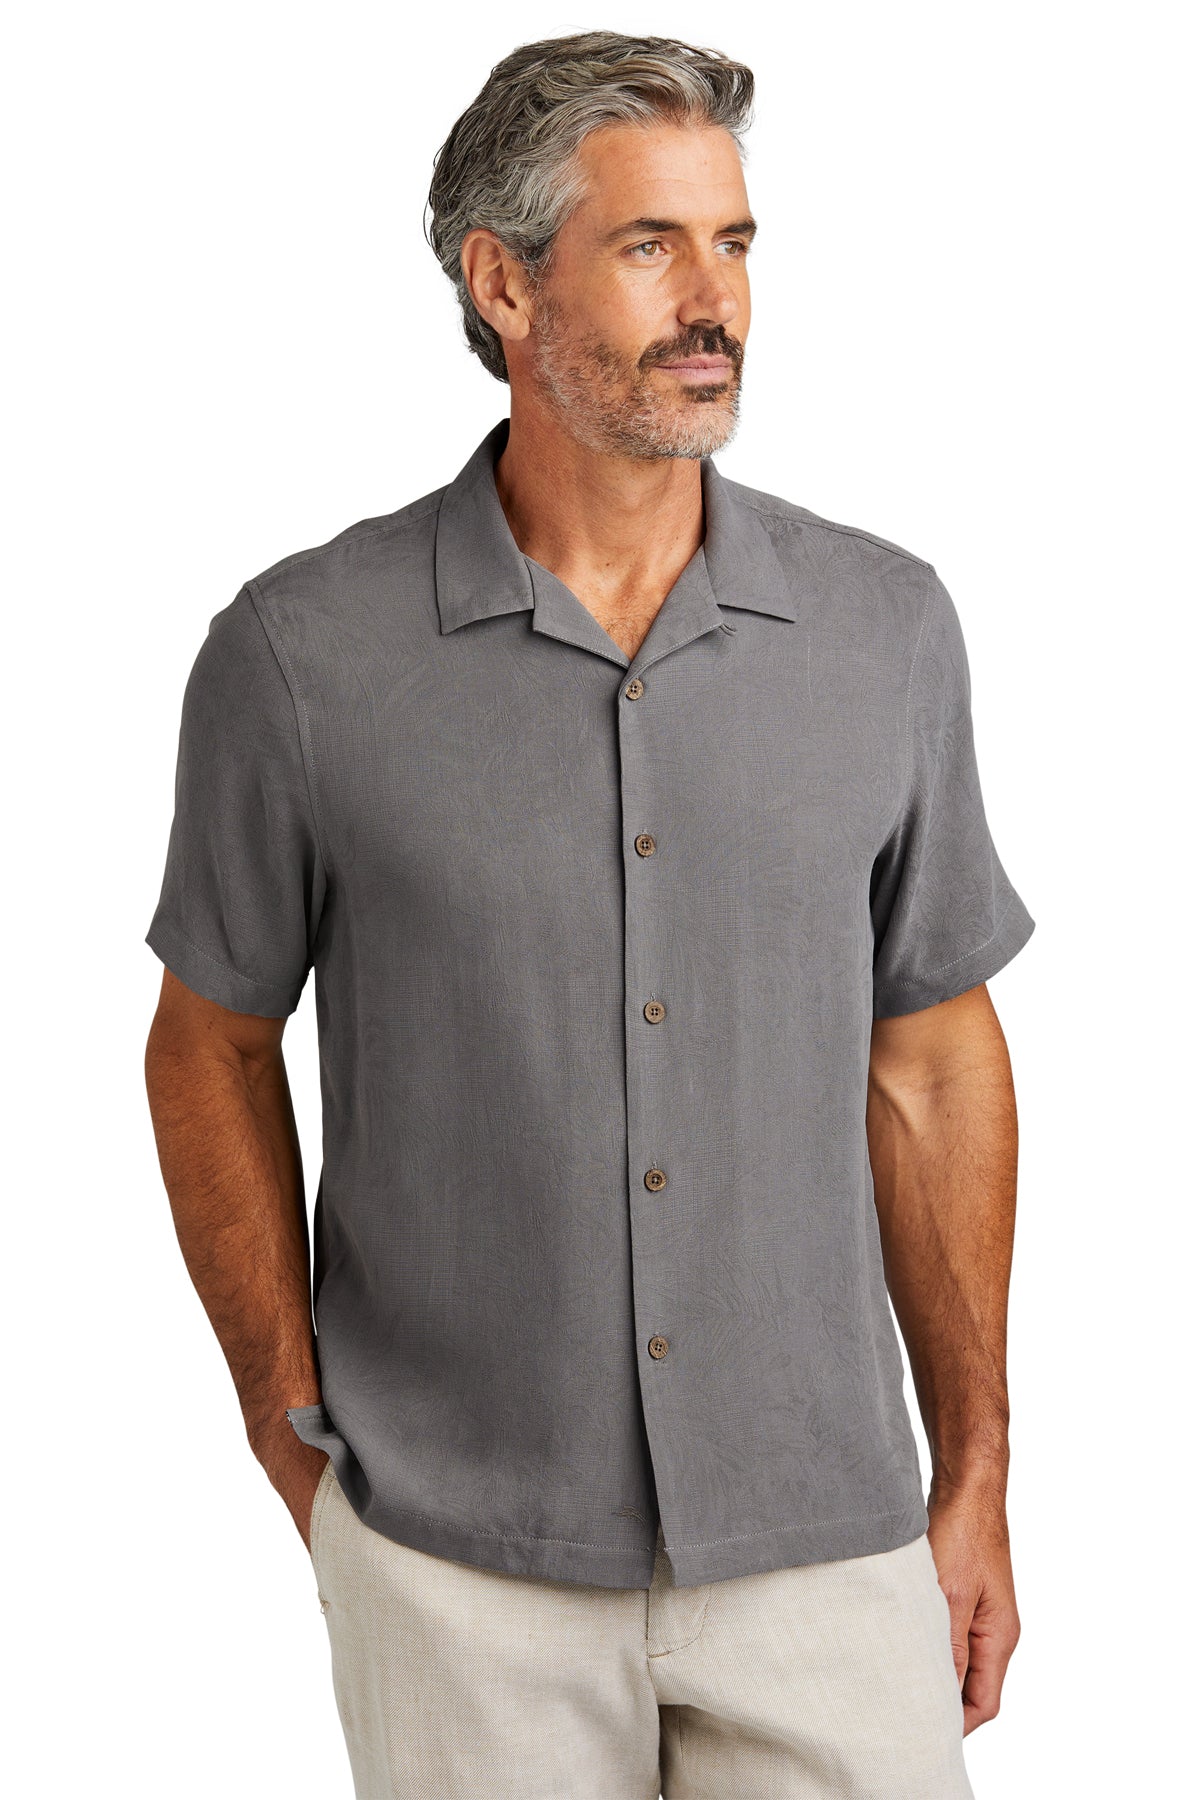 Custom Work Shirts, T-Shirts, and Button-Down Shirts